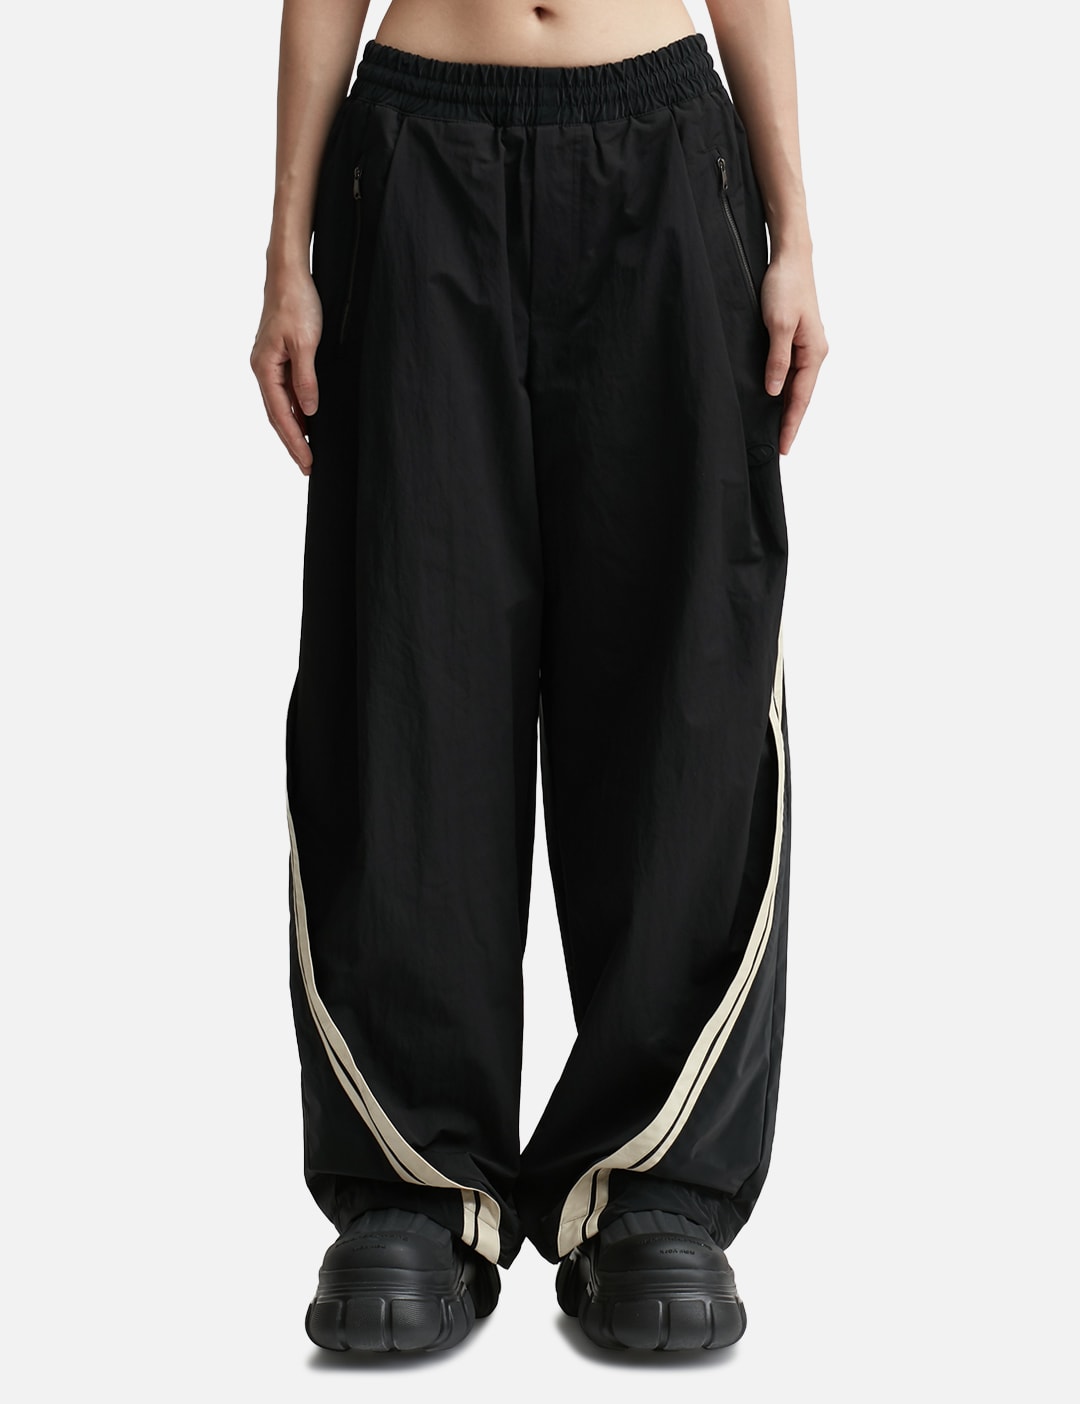 Baggy Workout Pants :C500 California Crazy Wear Workout Pants trousers -  Patterns - Gym Vests